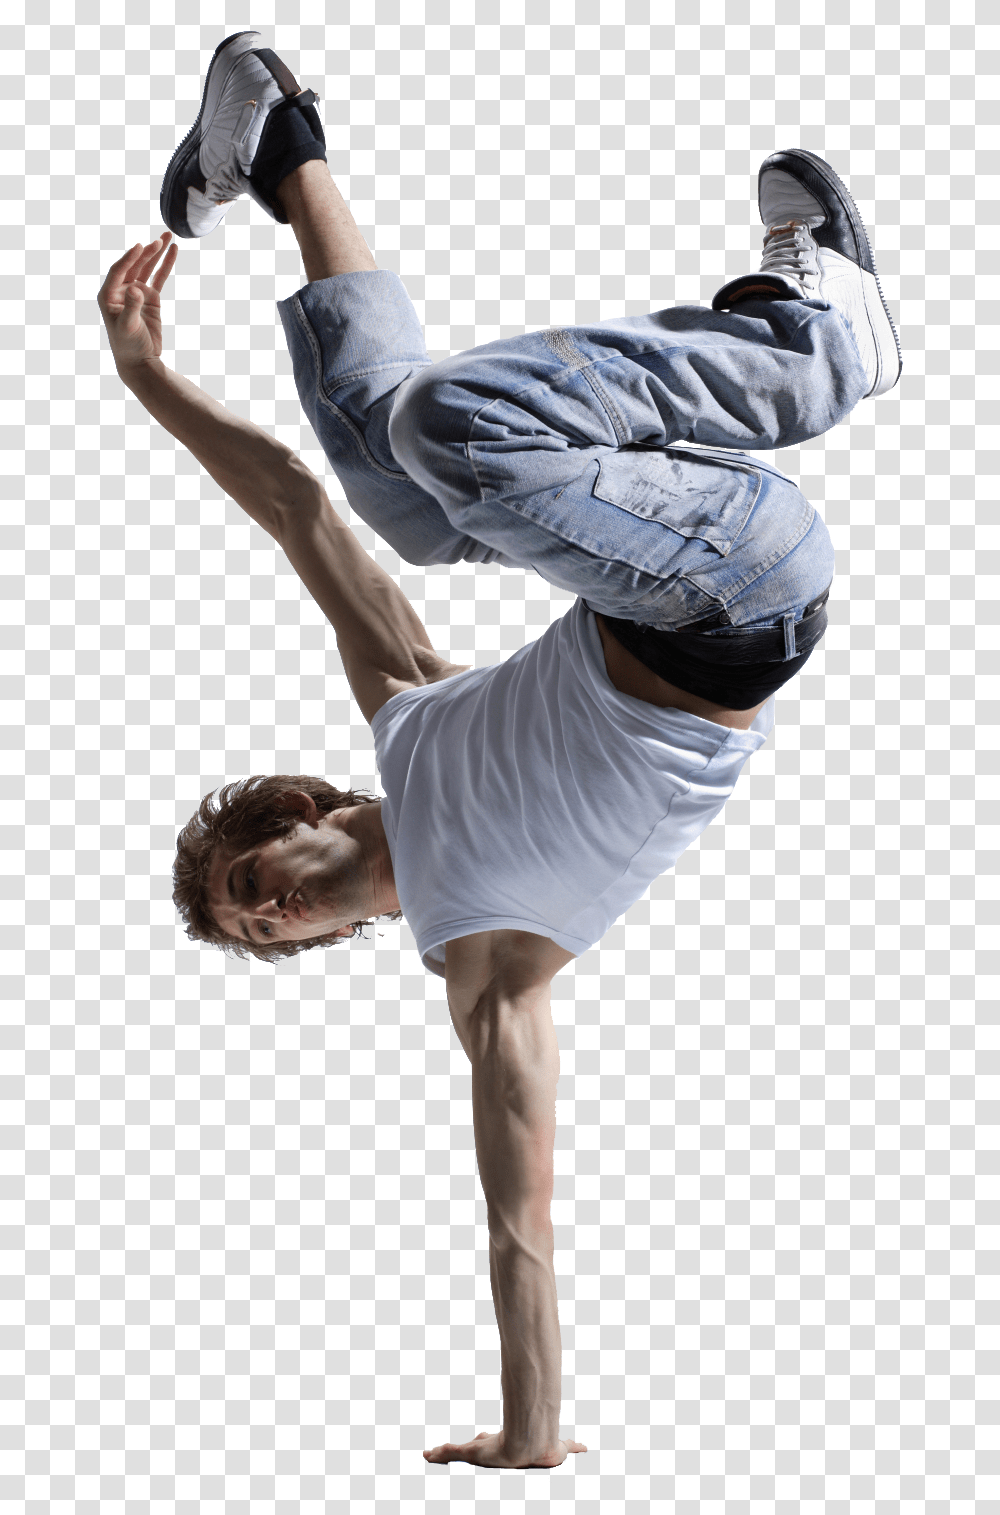 Break Dance Images Trancparent Breakdancer, Person, Human, Dance Pose, Leisure Activities Transparent Png